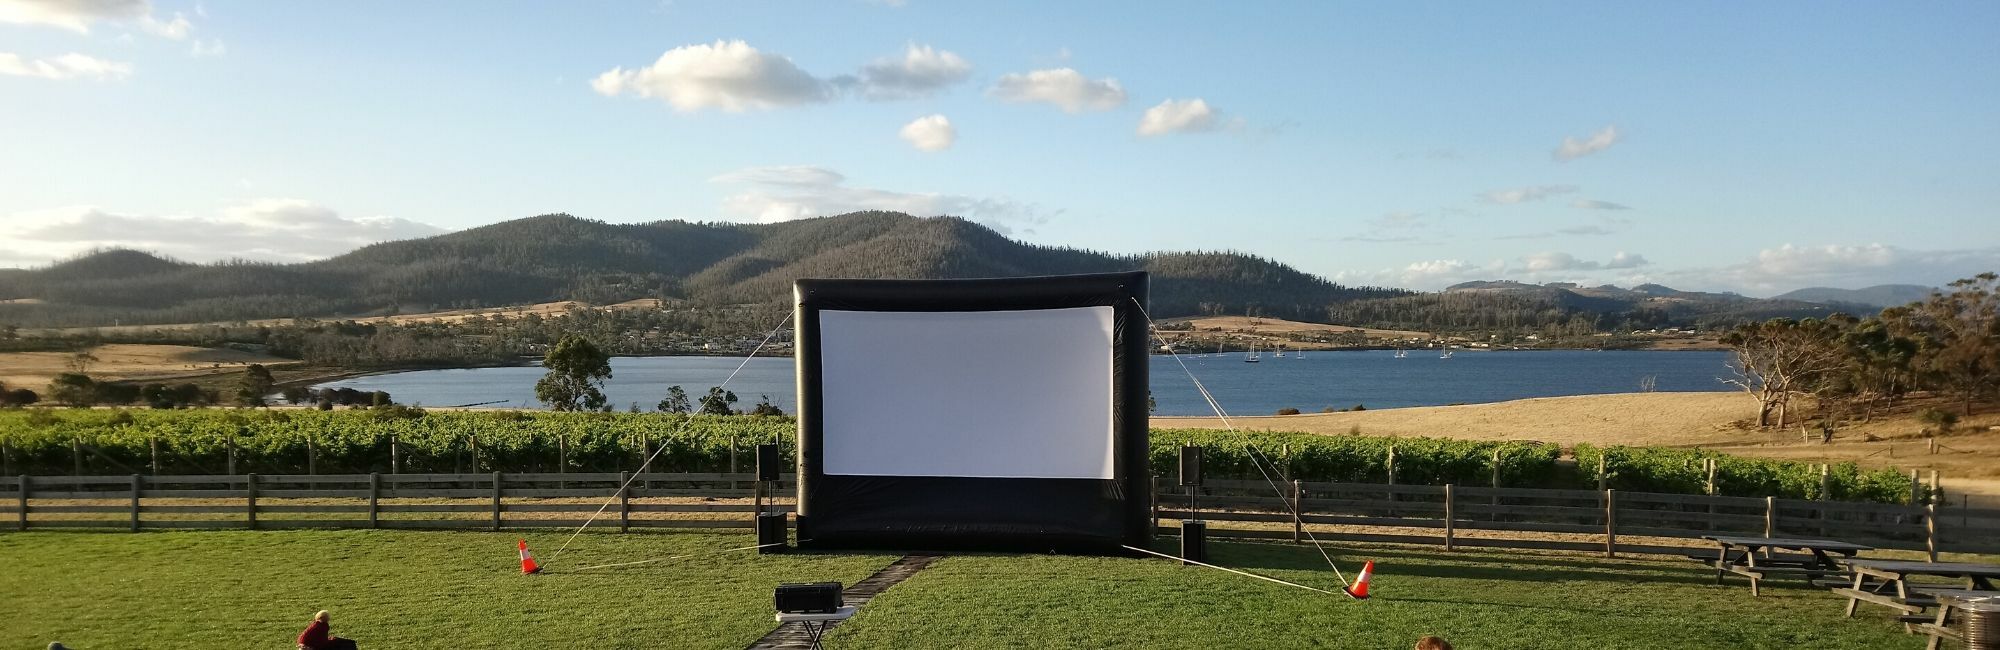 Tassie Open Air Cinemas 5M Outdoor Inflatable Screen at Bangor Vineyard Shed